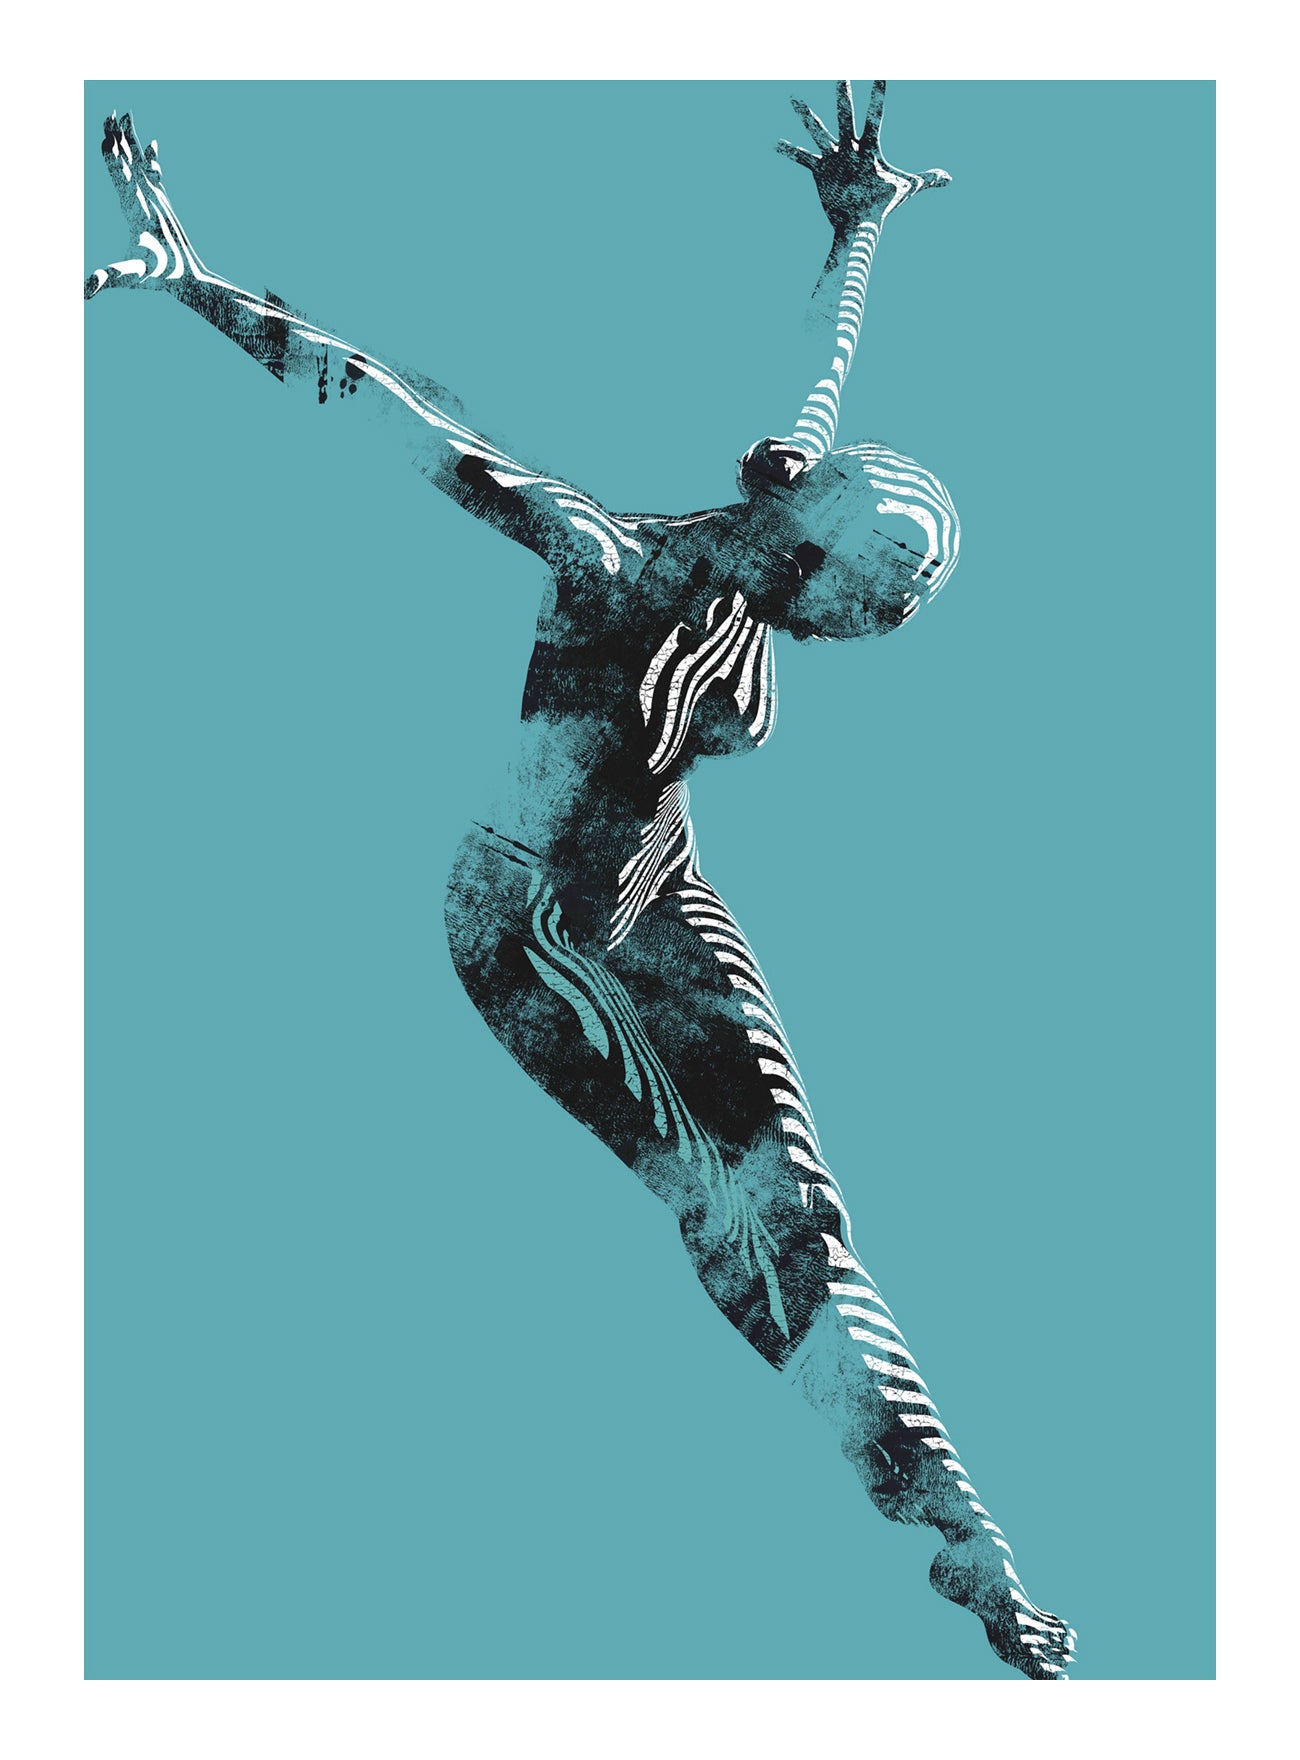 Jason Keeley Artist Gravity & Grace artwork Limited edition art print online Gallery Tap Galleries